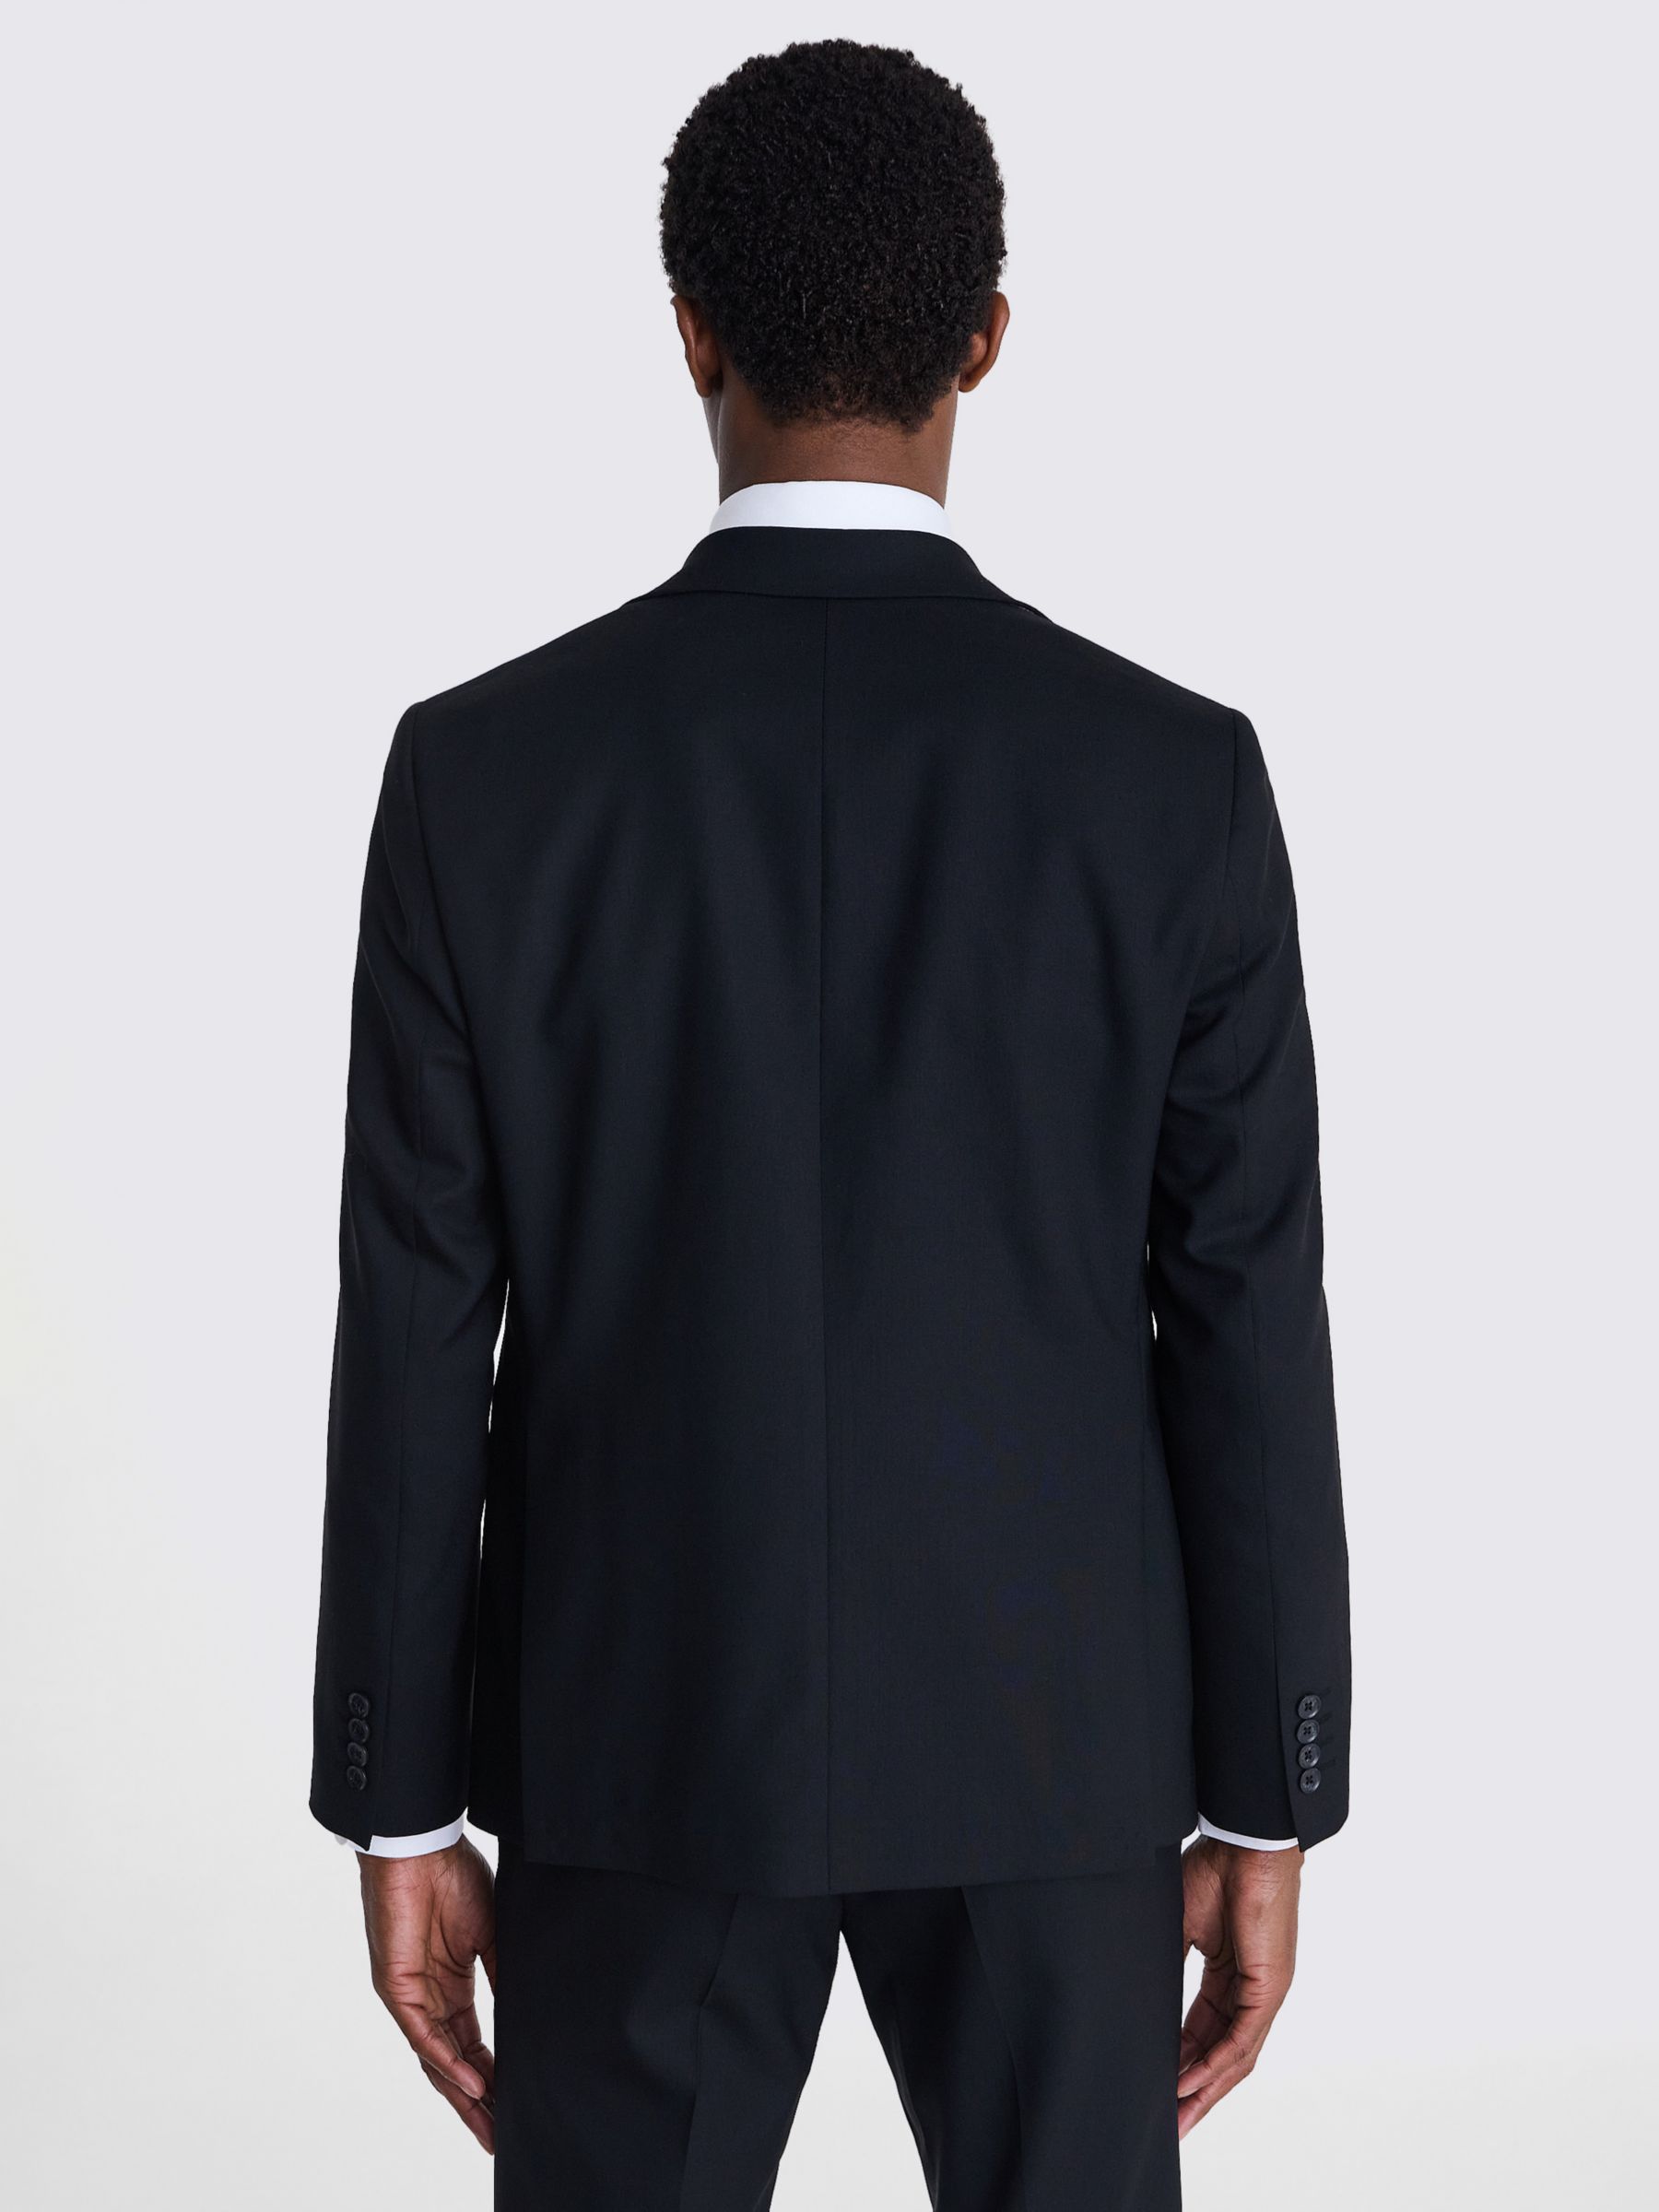 Buy Moss x Barberis Italian Tailored Fit Half Lined Jacket, Black Online at johnlewis.com